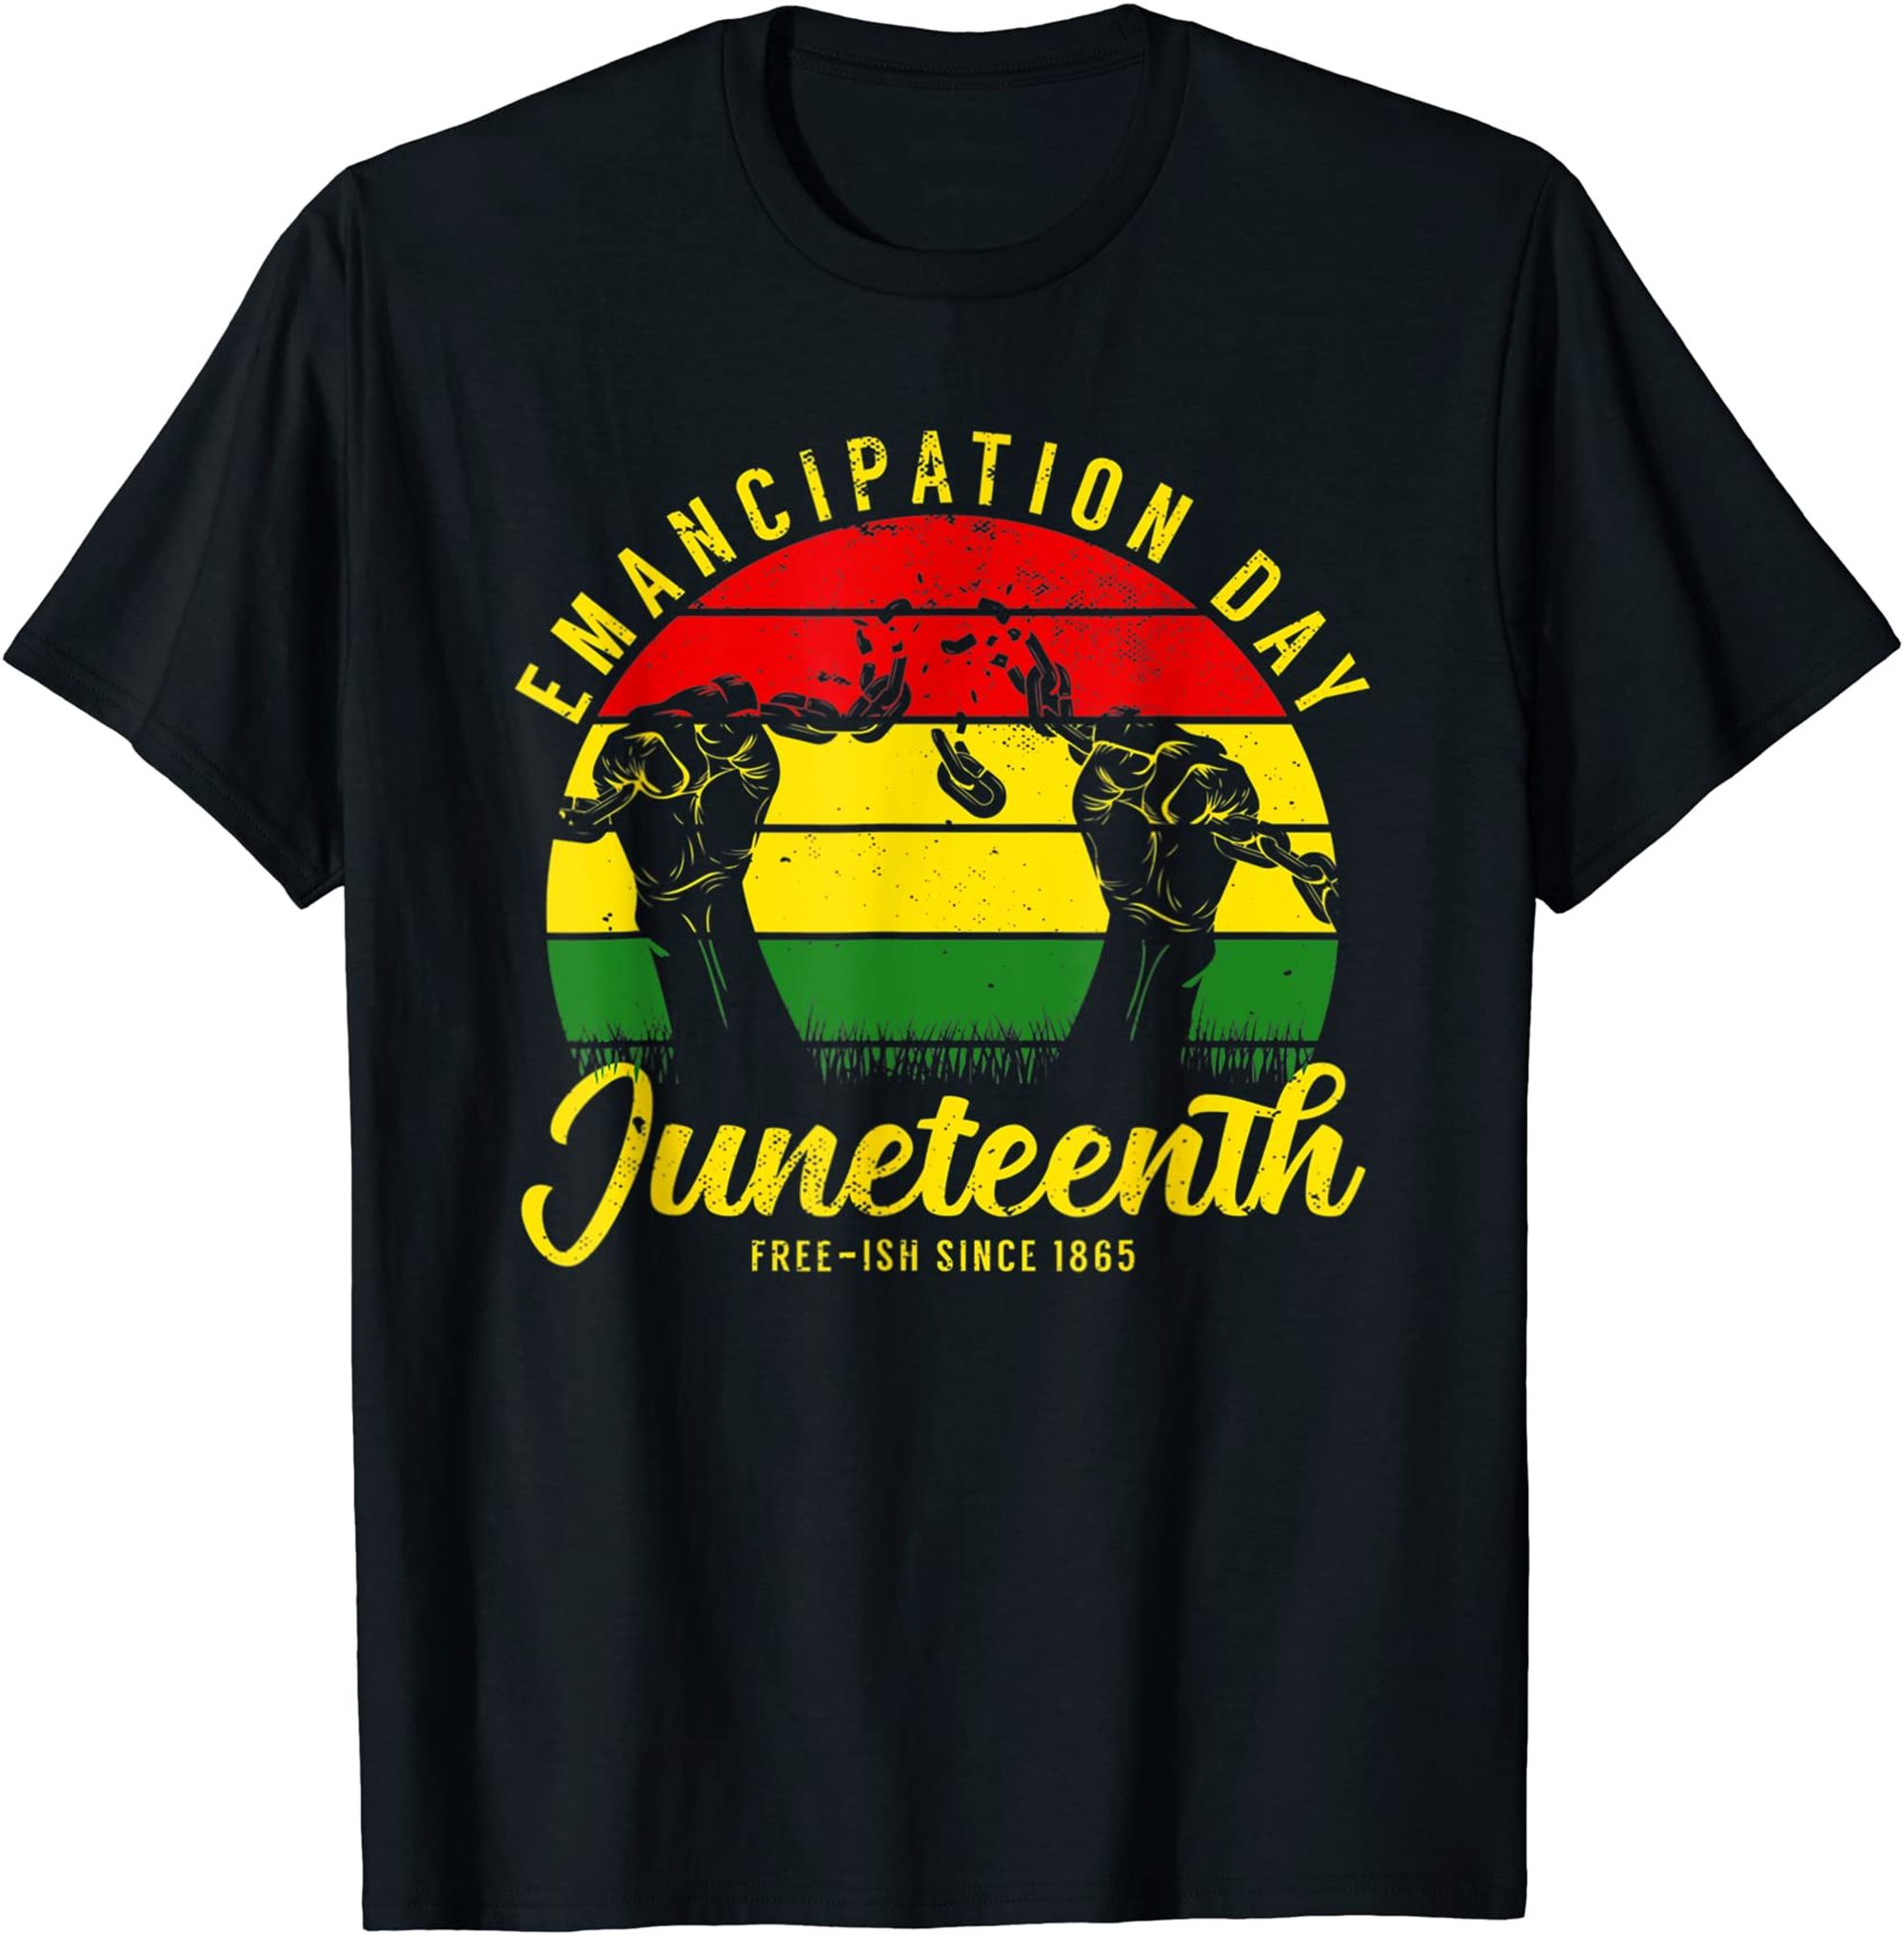 Juneteenth Emancipation Day Vintage Cool Melanin Black Pride T-shirt Full Size Up To 5xl